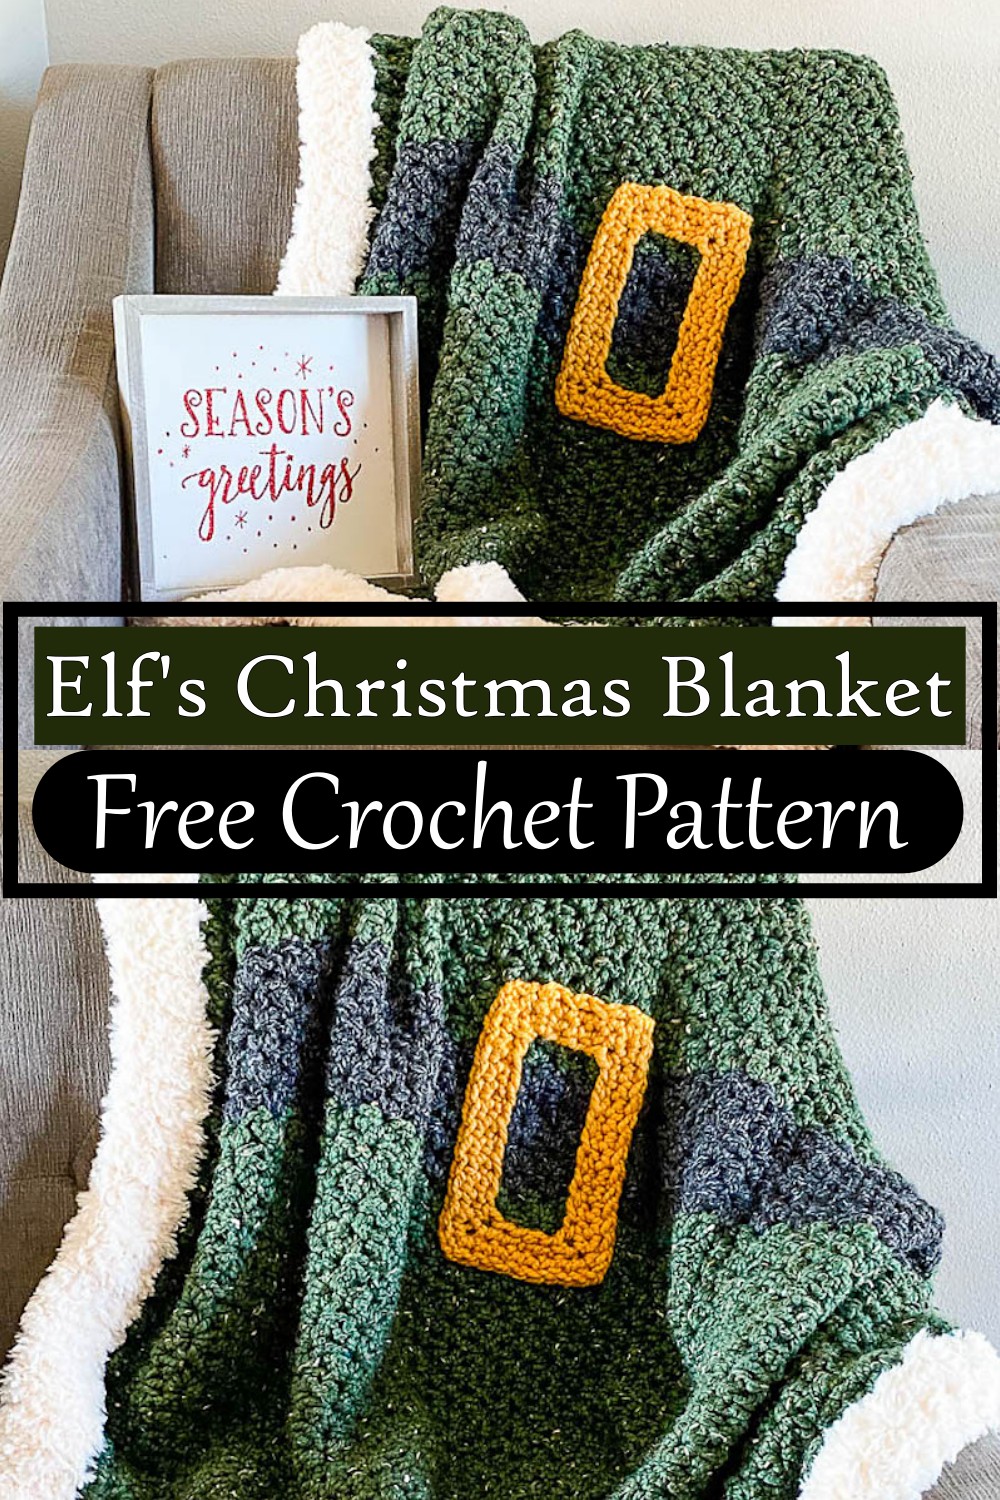 Elf's Christmas Blanket